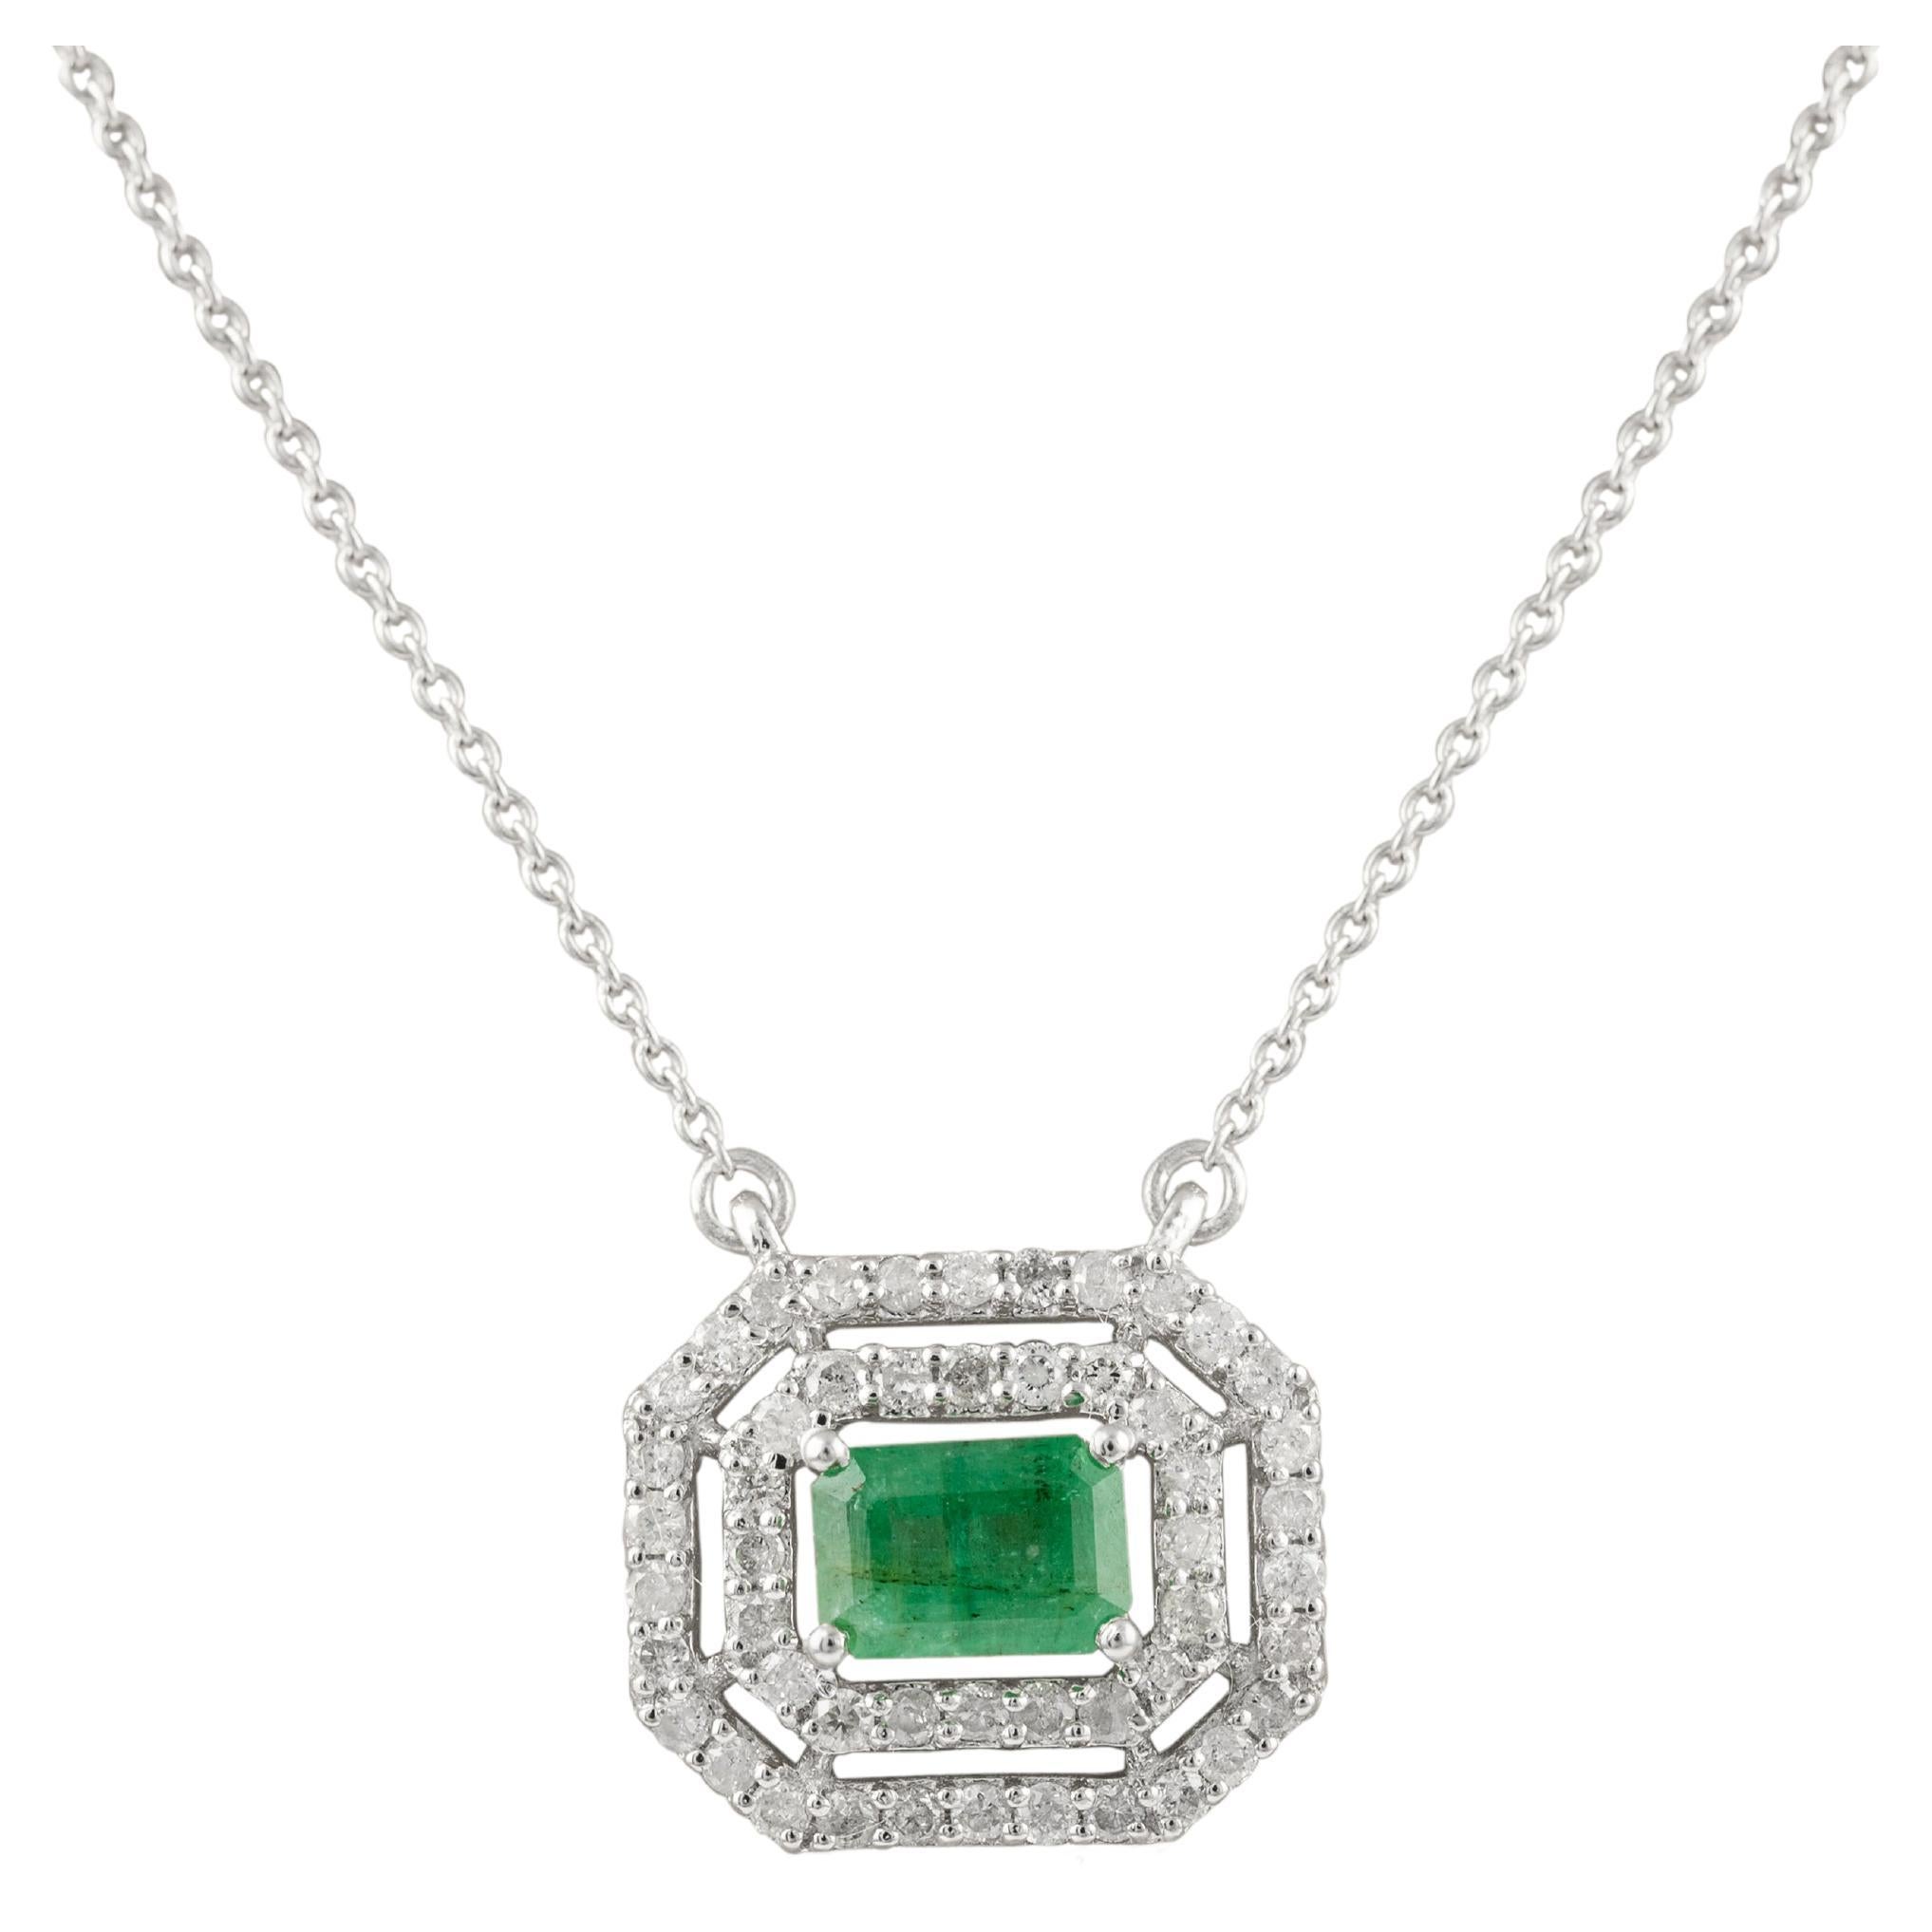 Brilliant Emerald Diamond Pendant Necklace 14k Solid White Gold, Gift For Sister